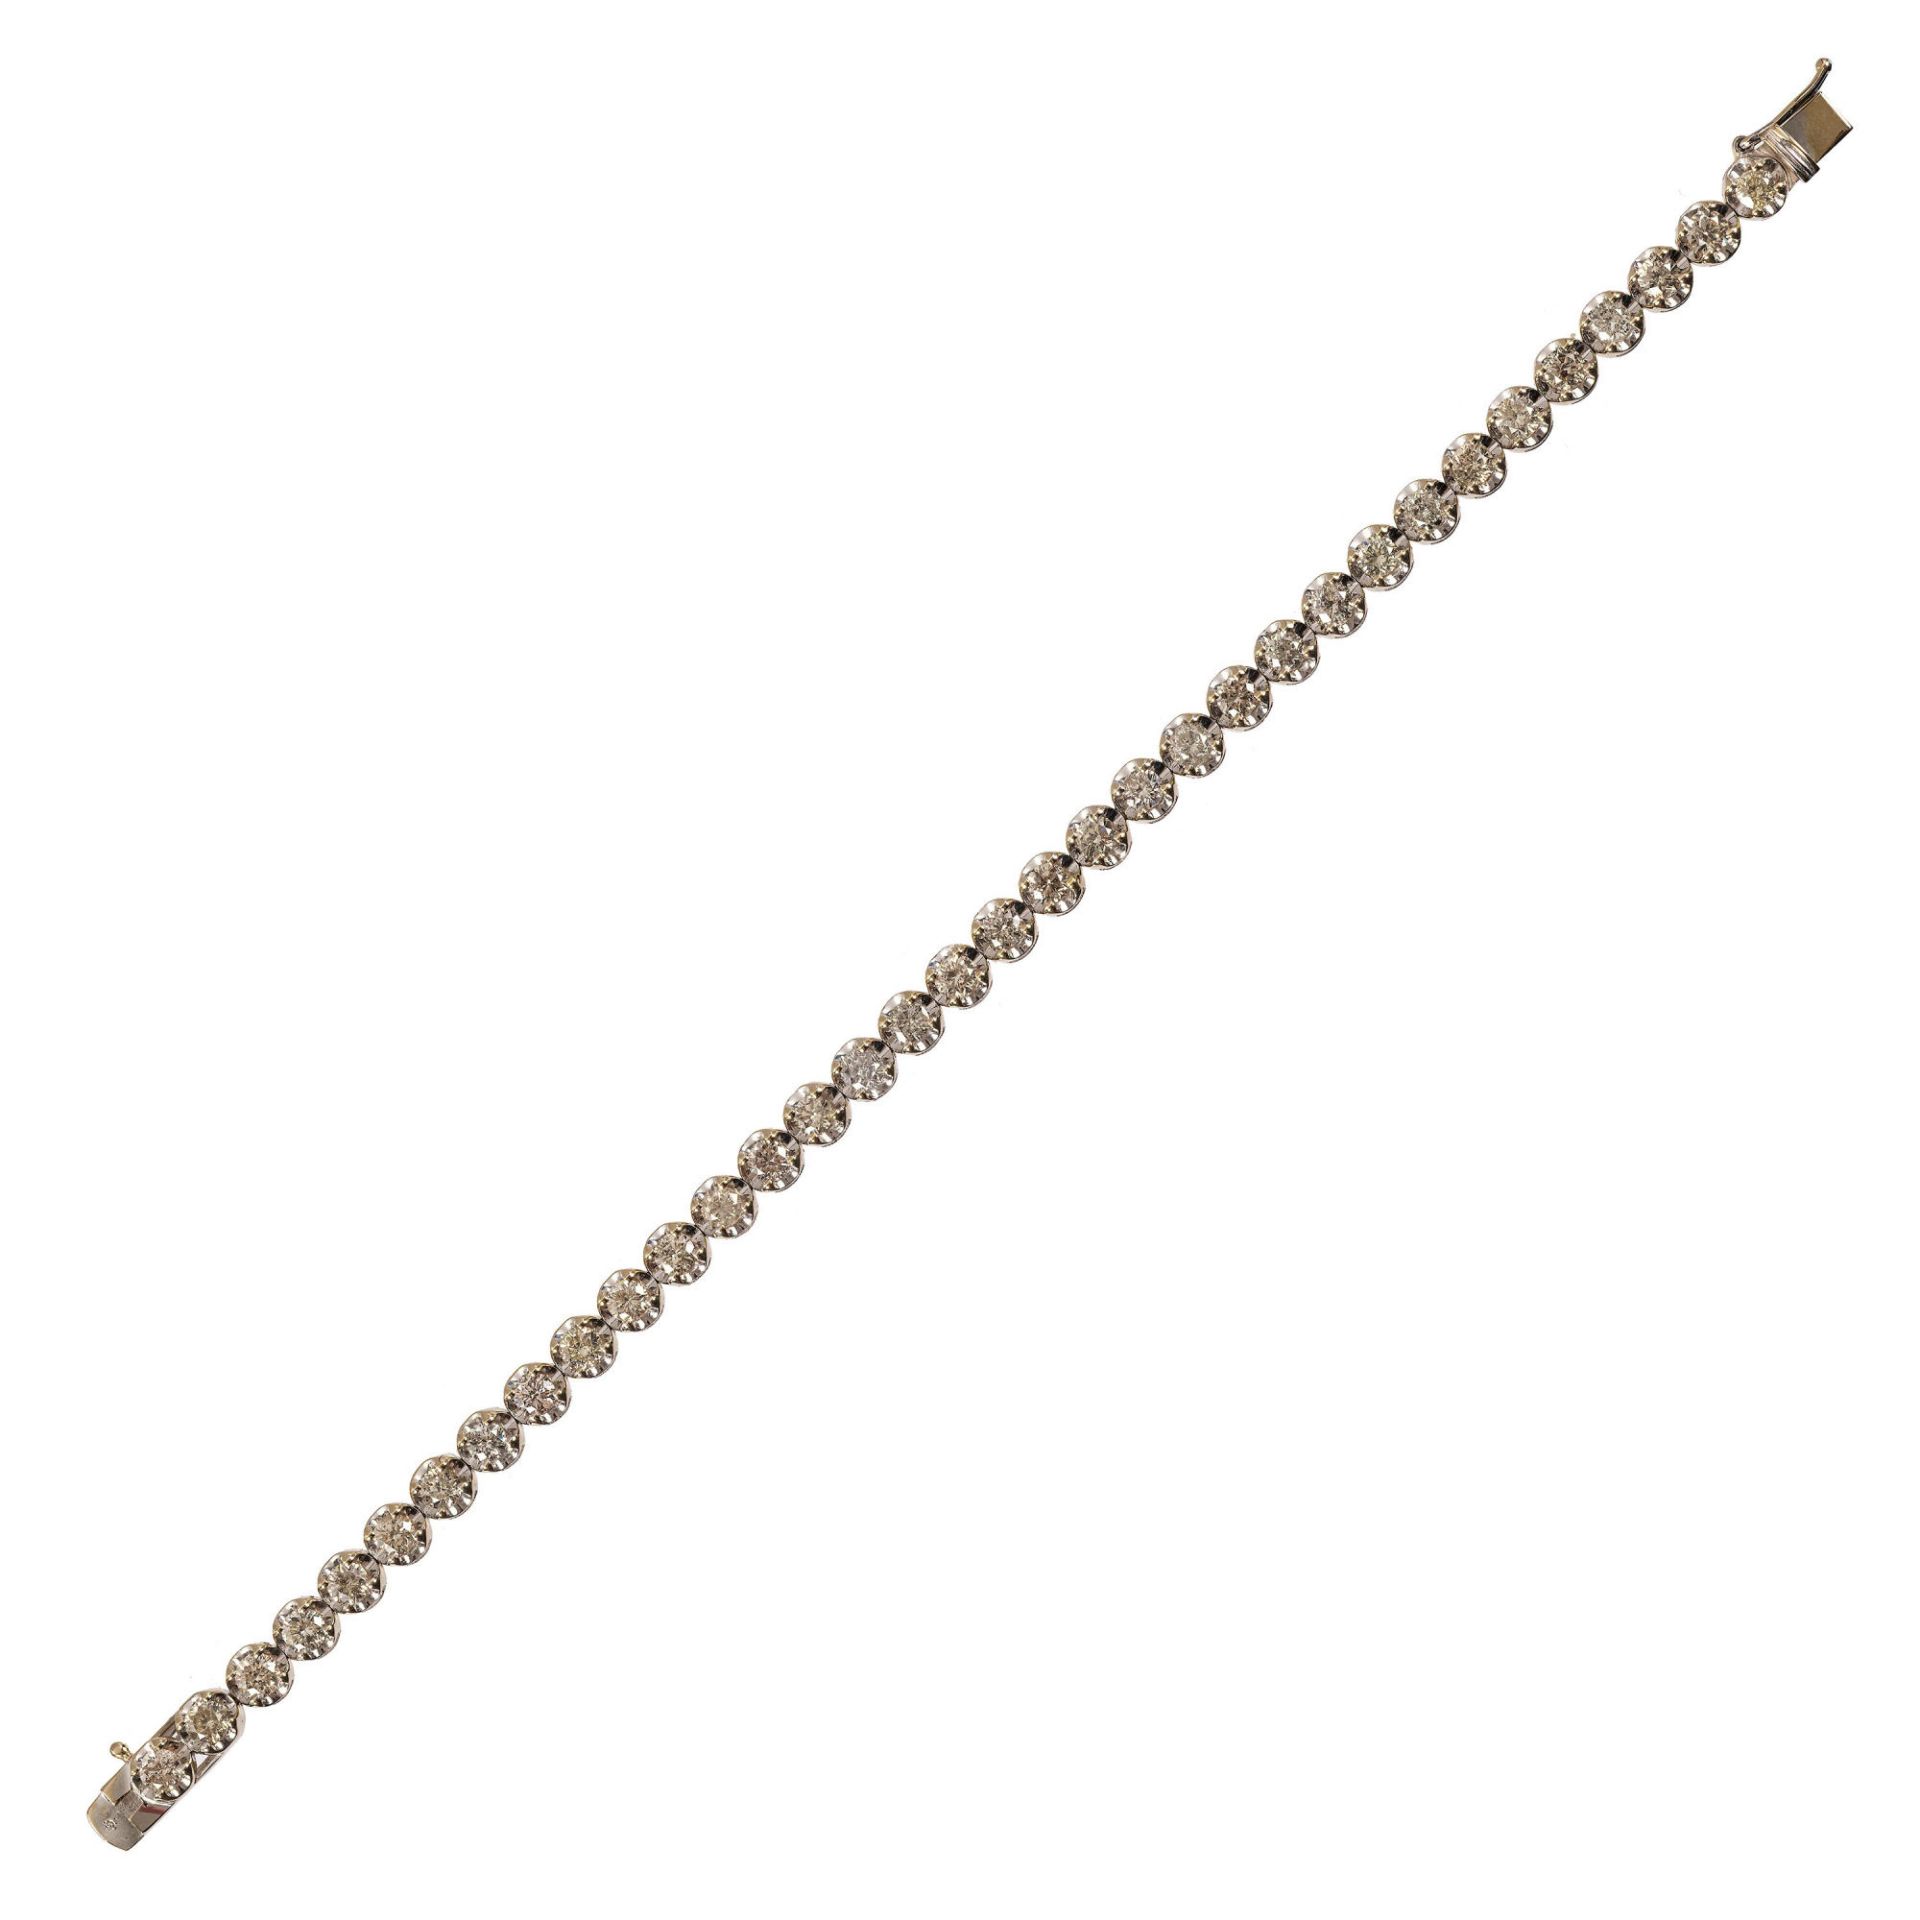 BRILLANT-BRACELET / Diamond-bracelet